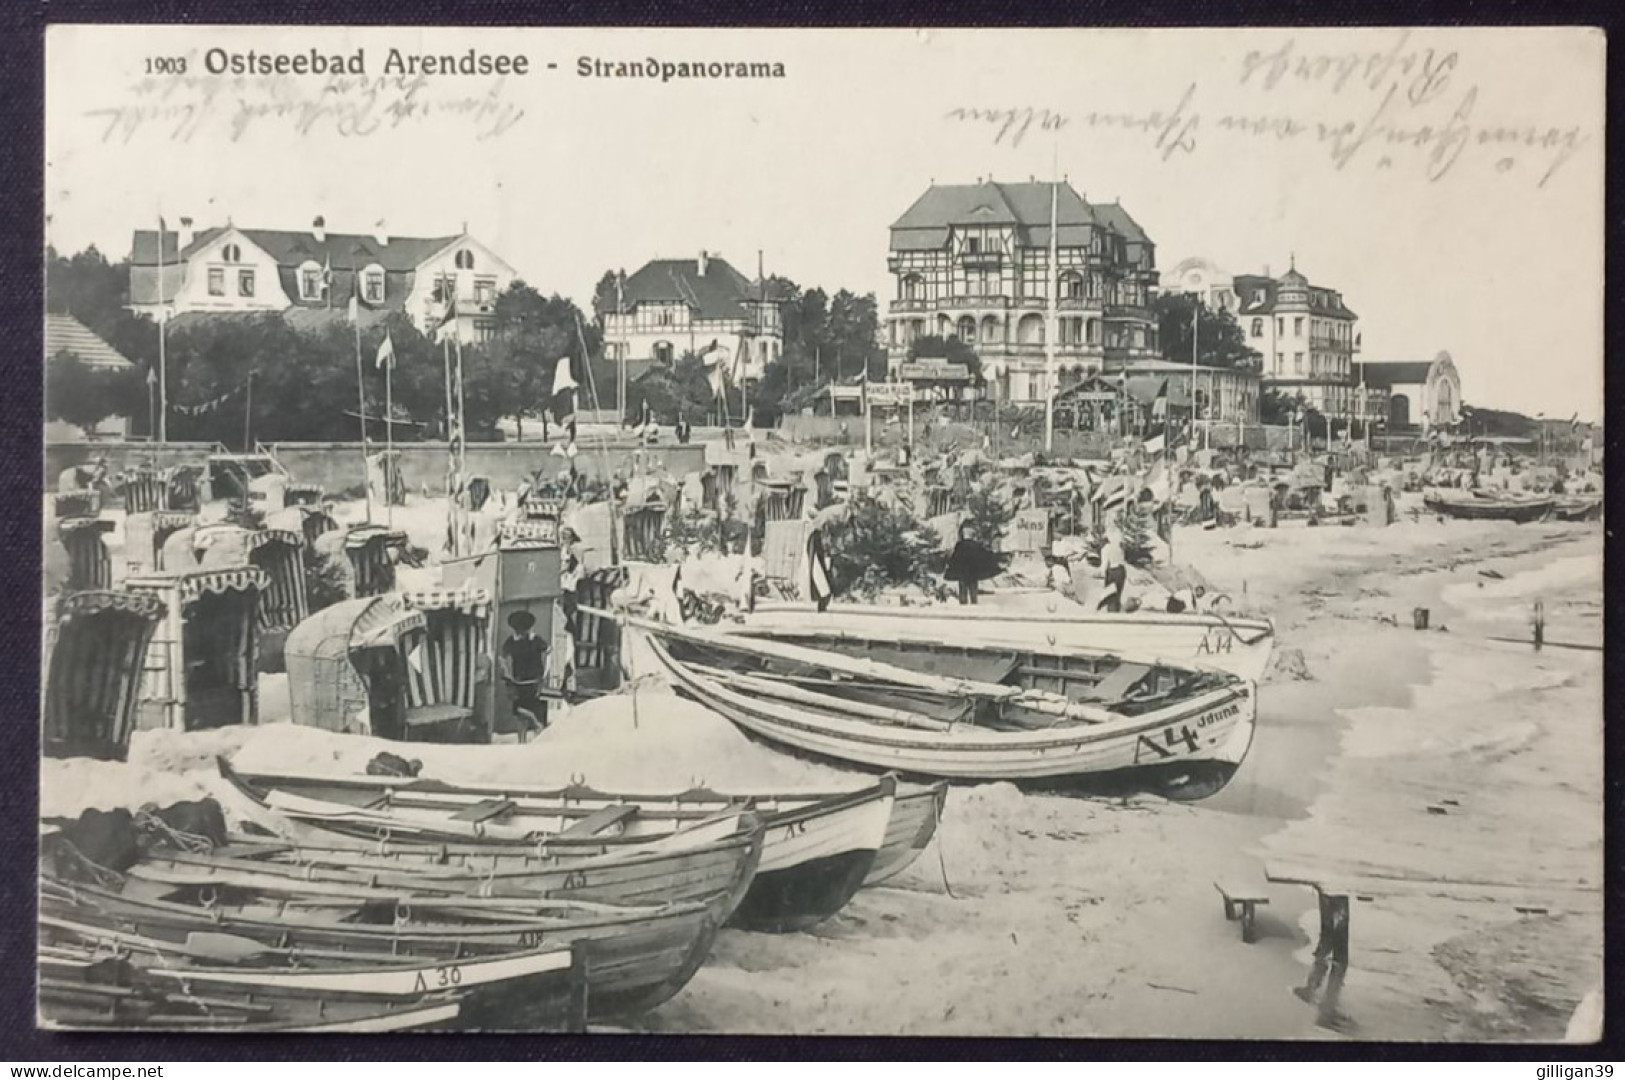 Kühlungsborn, OSTSEEBAD ARENDSEE, Strandpanorama, 1914 Gelaufen - Kühlungsborn